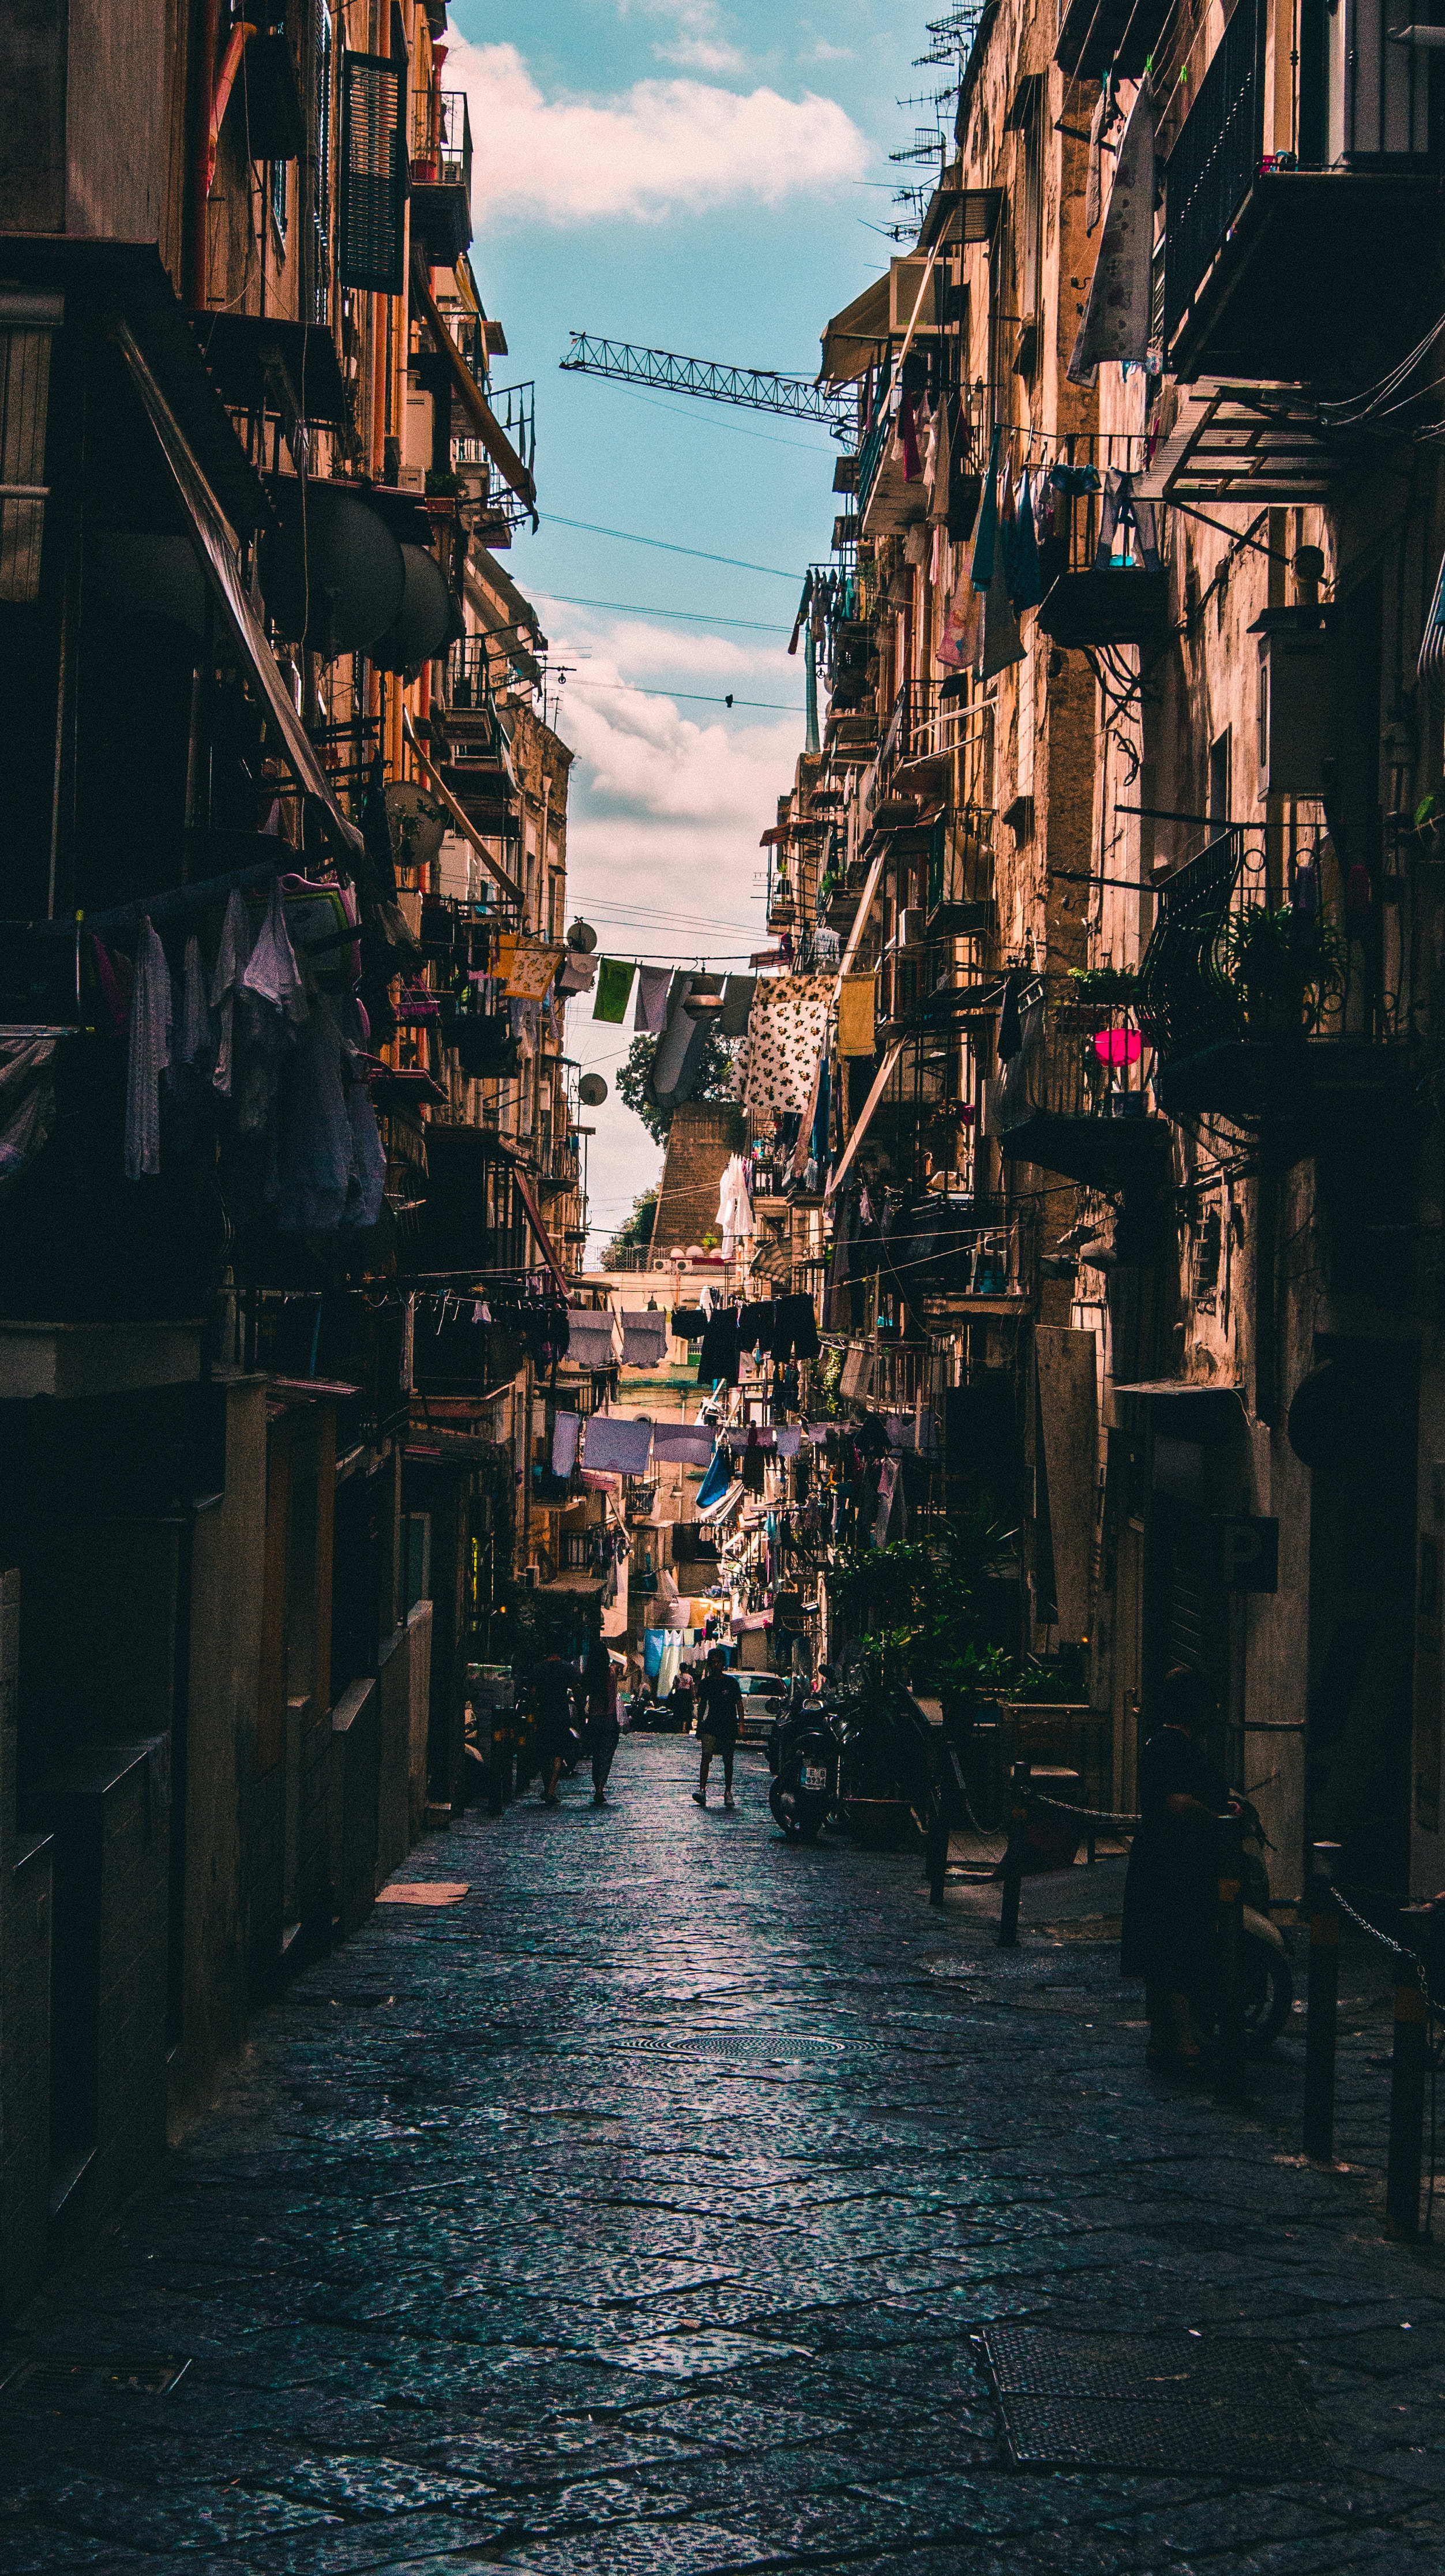 Naples, Italy, photo by Theo Roland via Unsplash